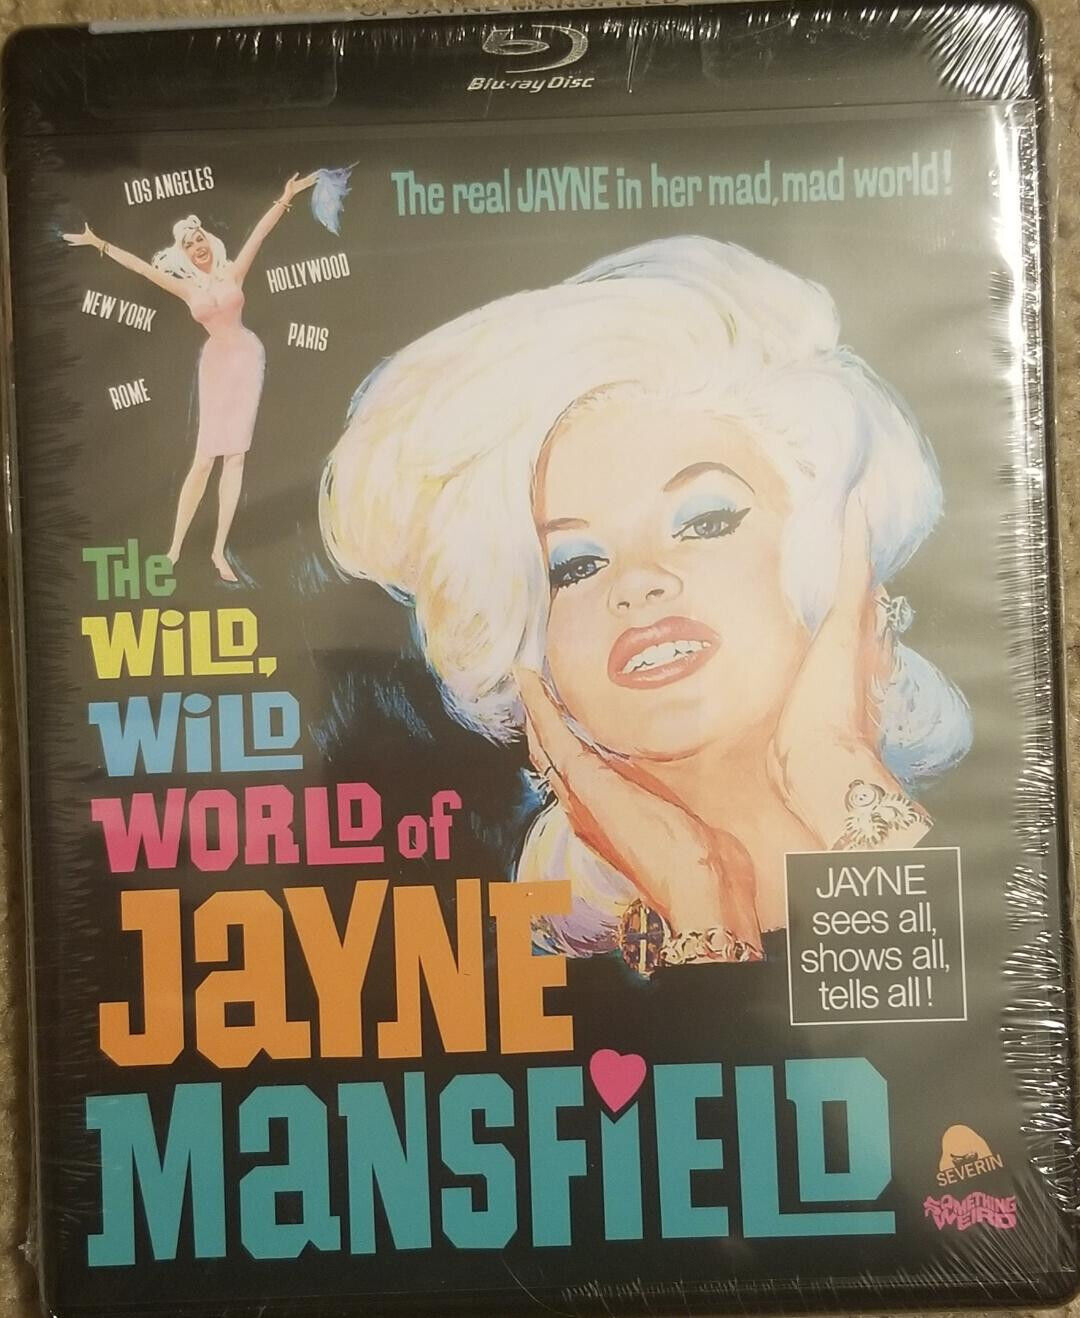 The Wild, Wild World of Jayne Mansfield (Blu-ray, 1968)